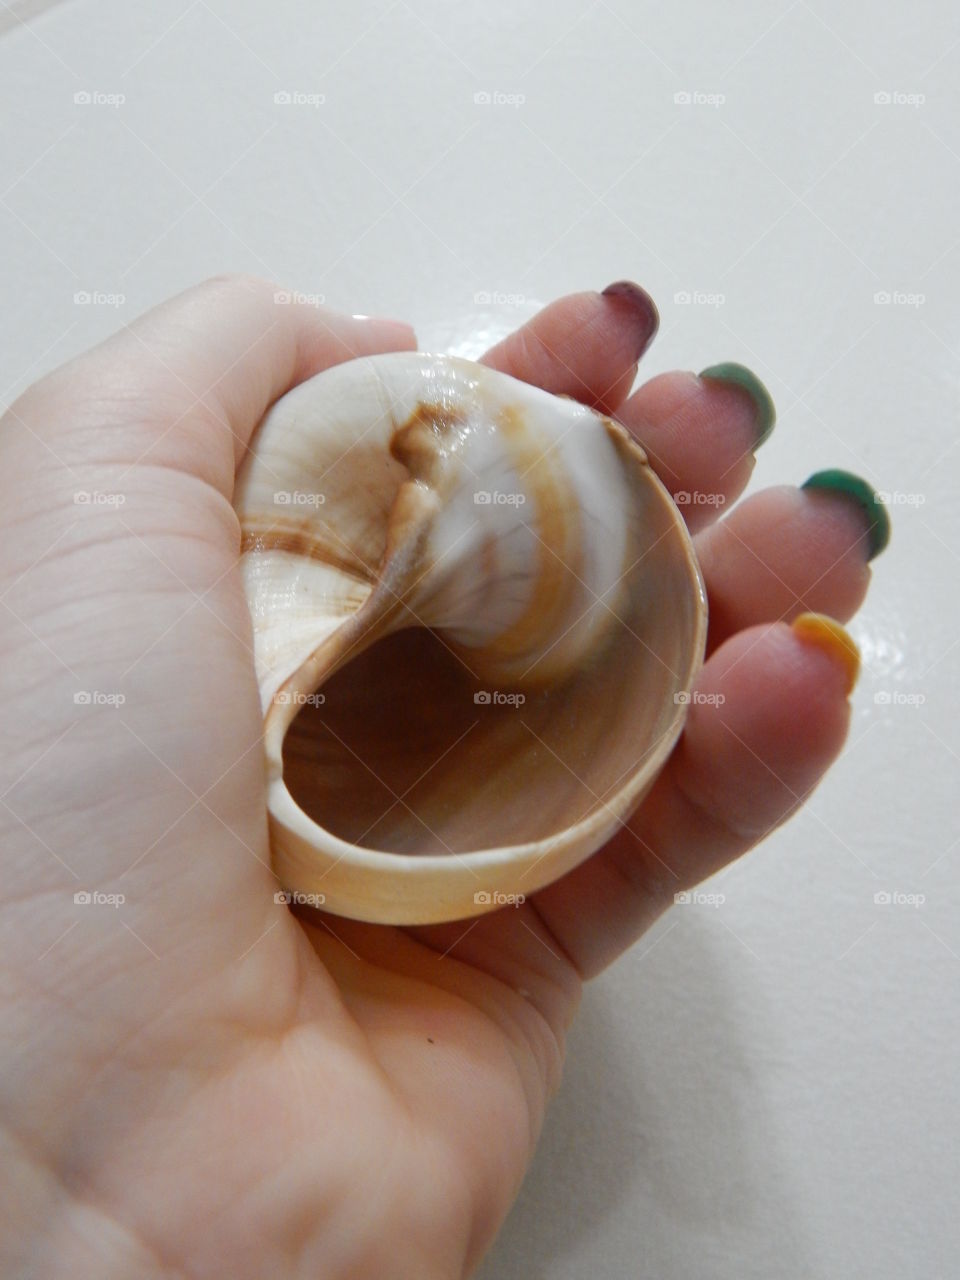 Inside the shell